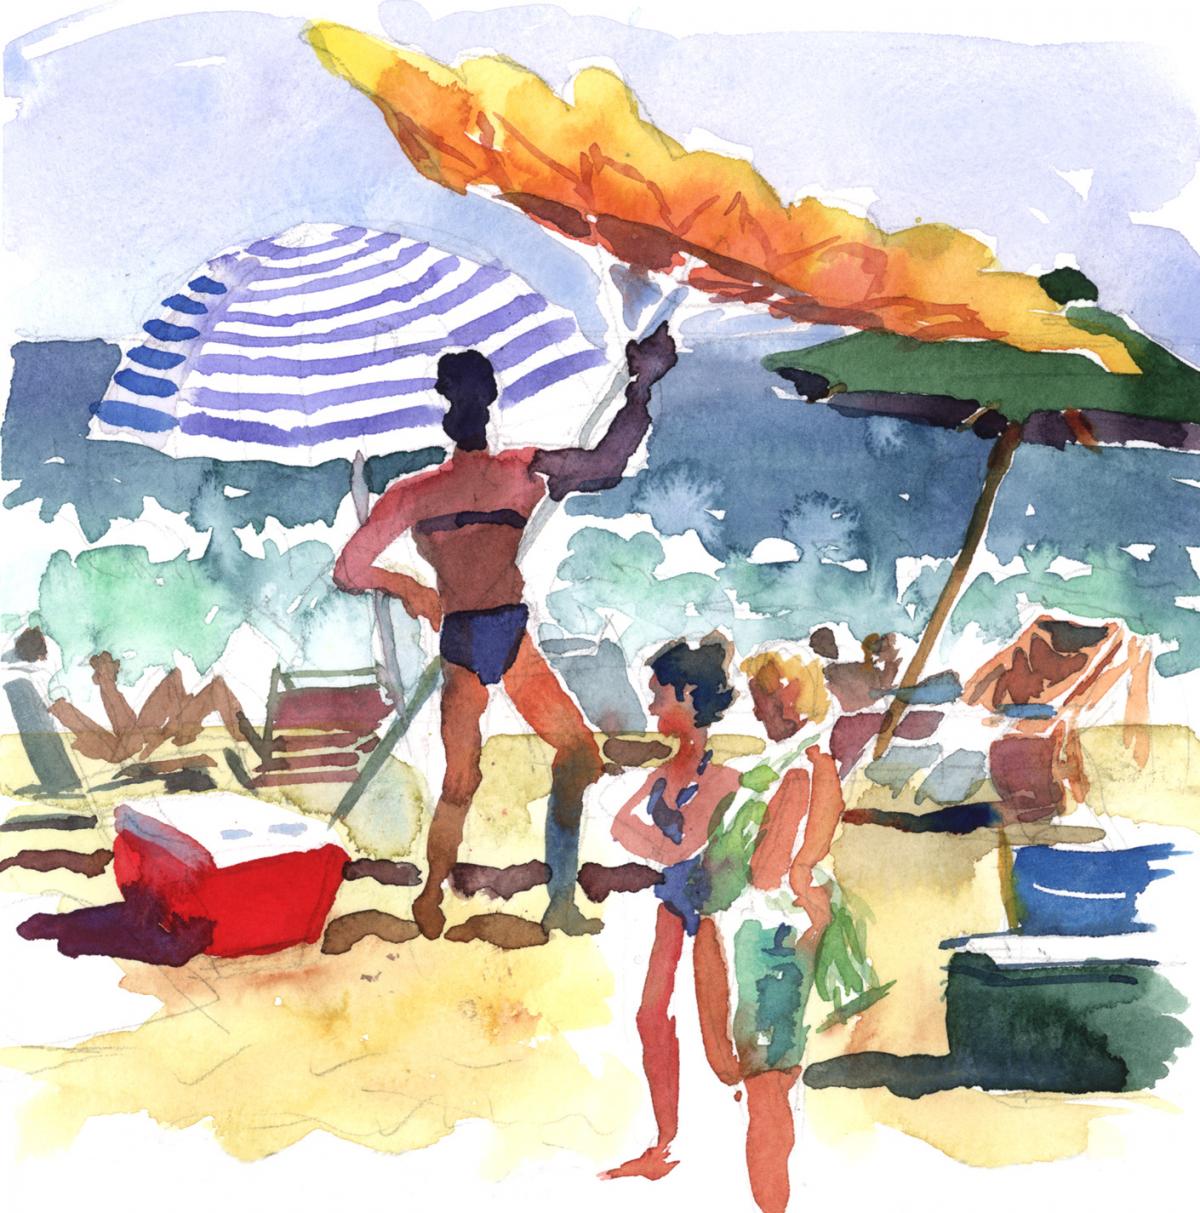 Windblown on Surfside - en plein air watercolor seascape beach scene painting by Frank Costantino.